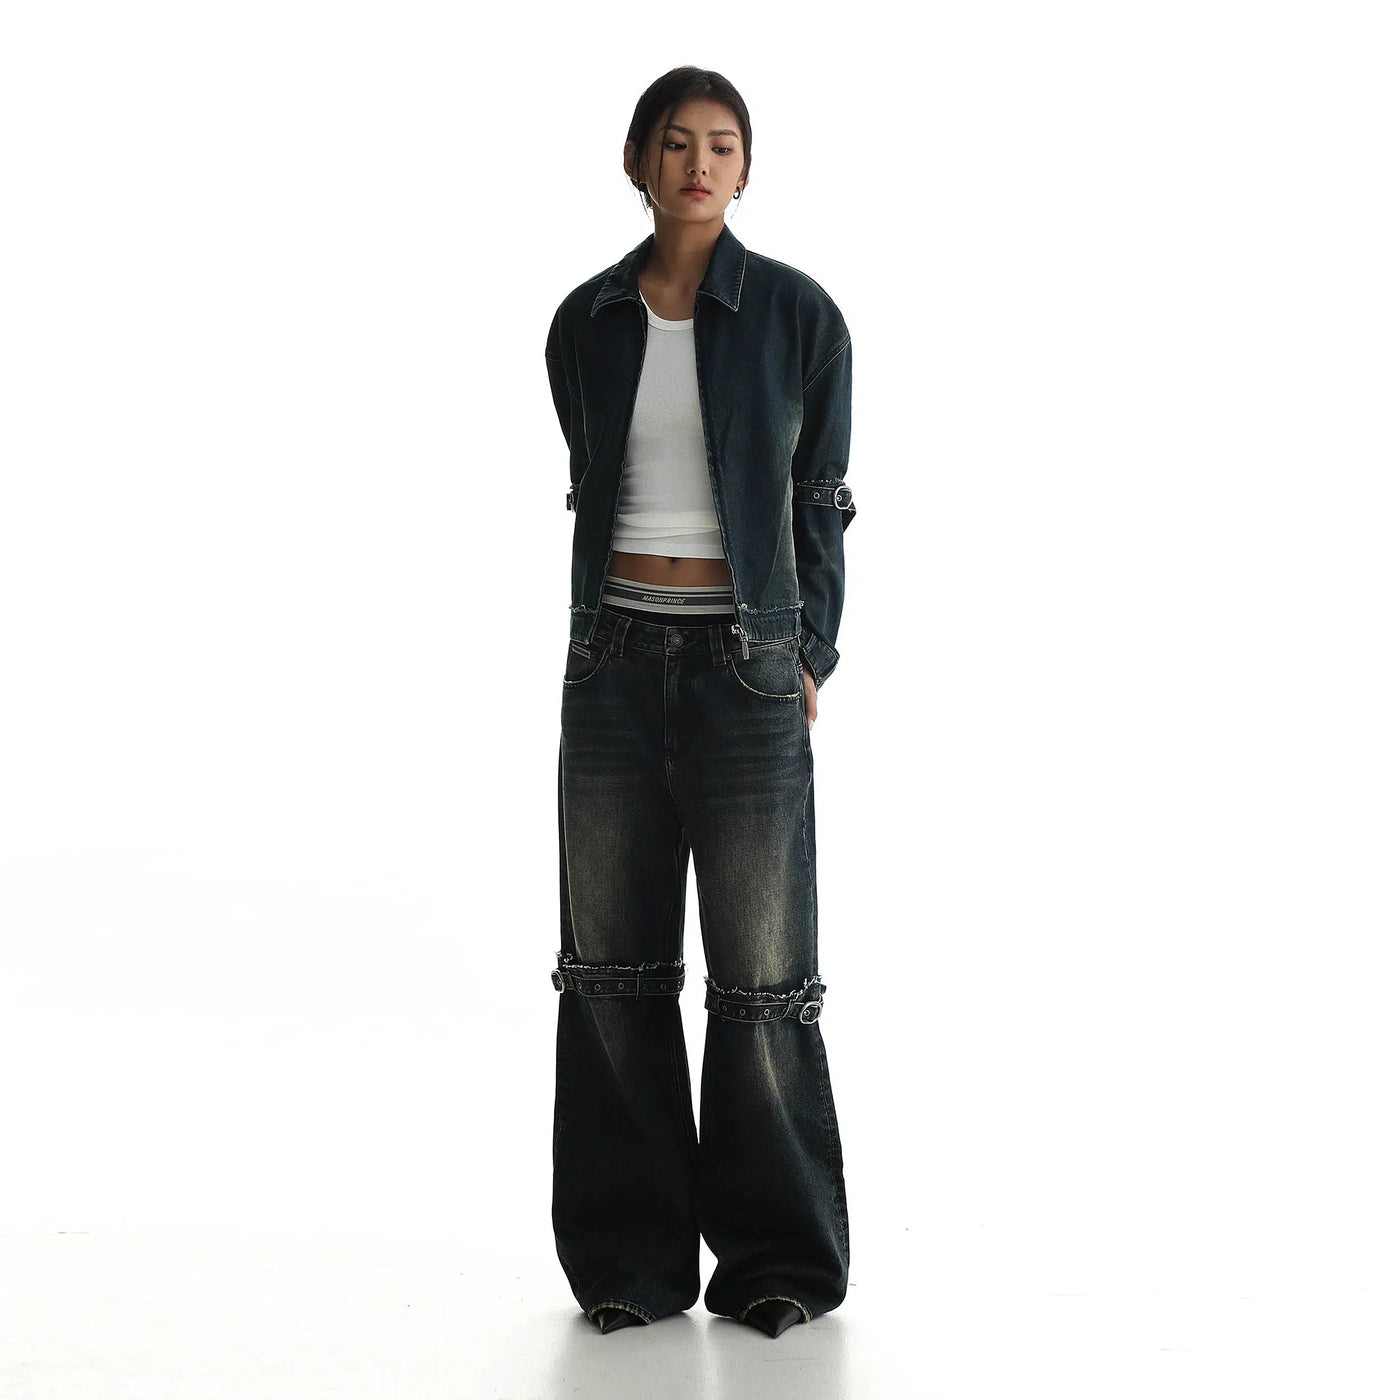 Distressed Strap Belts Denim Jacket Korean Street Fashion Jacket By Mason Prince Shop Online at OH Vault